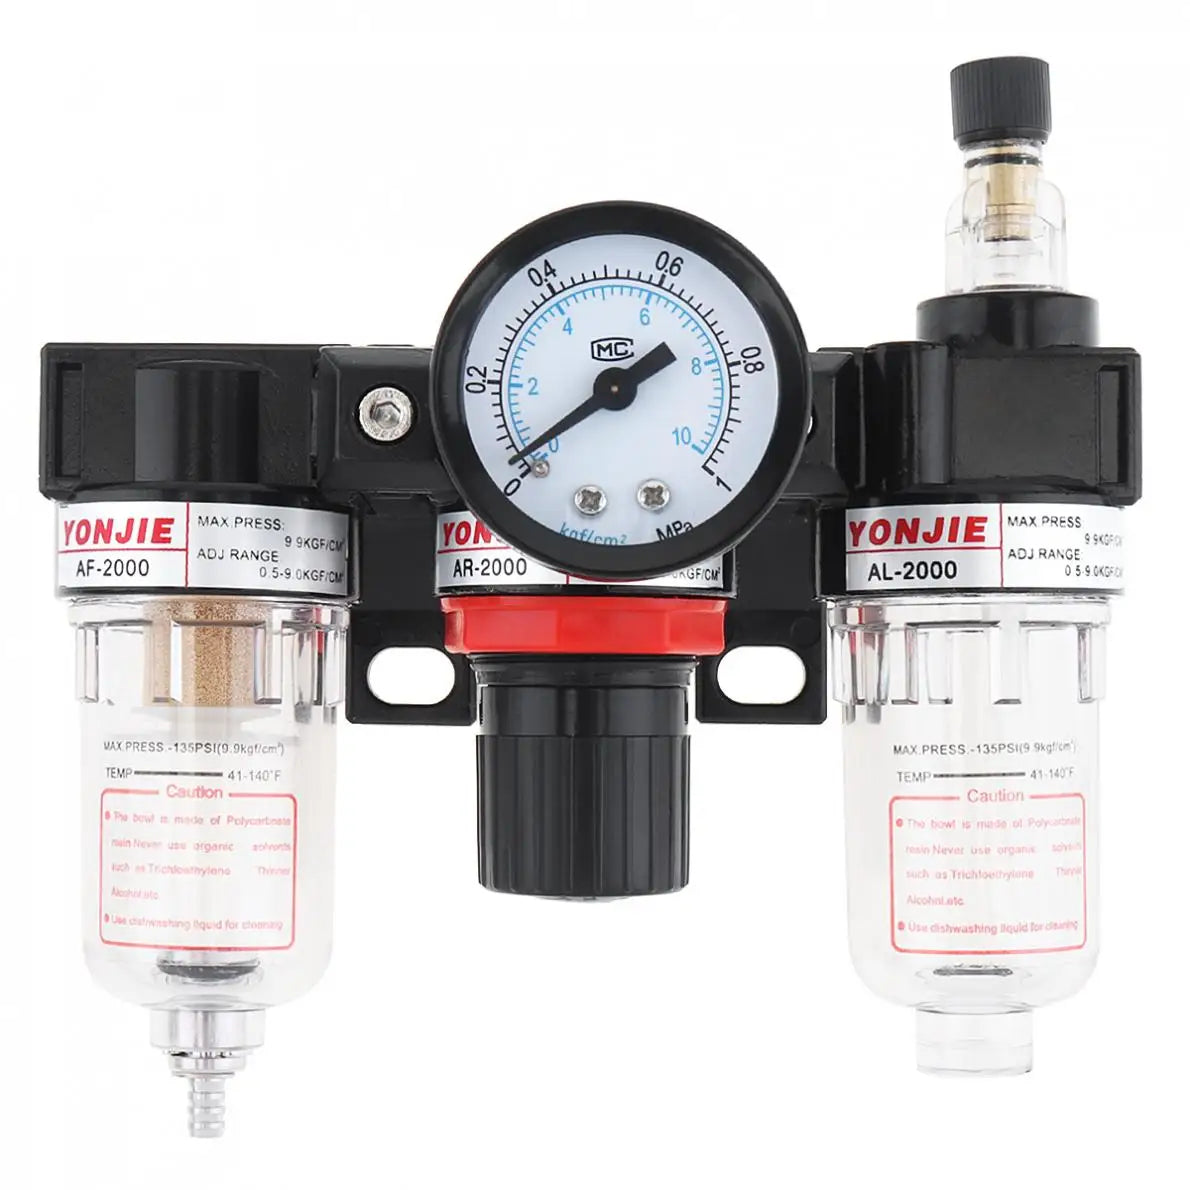 Air Compressor 0-1.0mpa Adjustable Three Union Oil Water Separator Regulator PT1/4(mm) Caliber